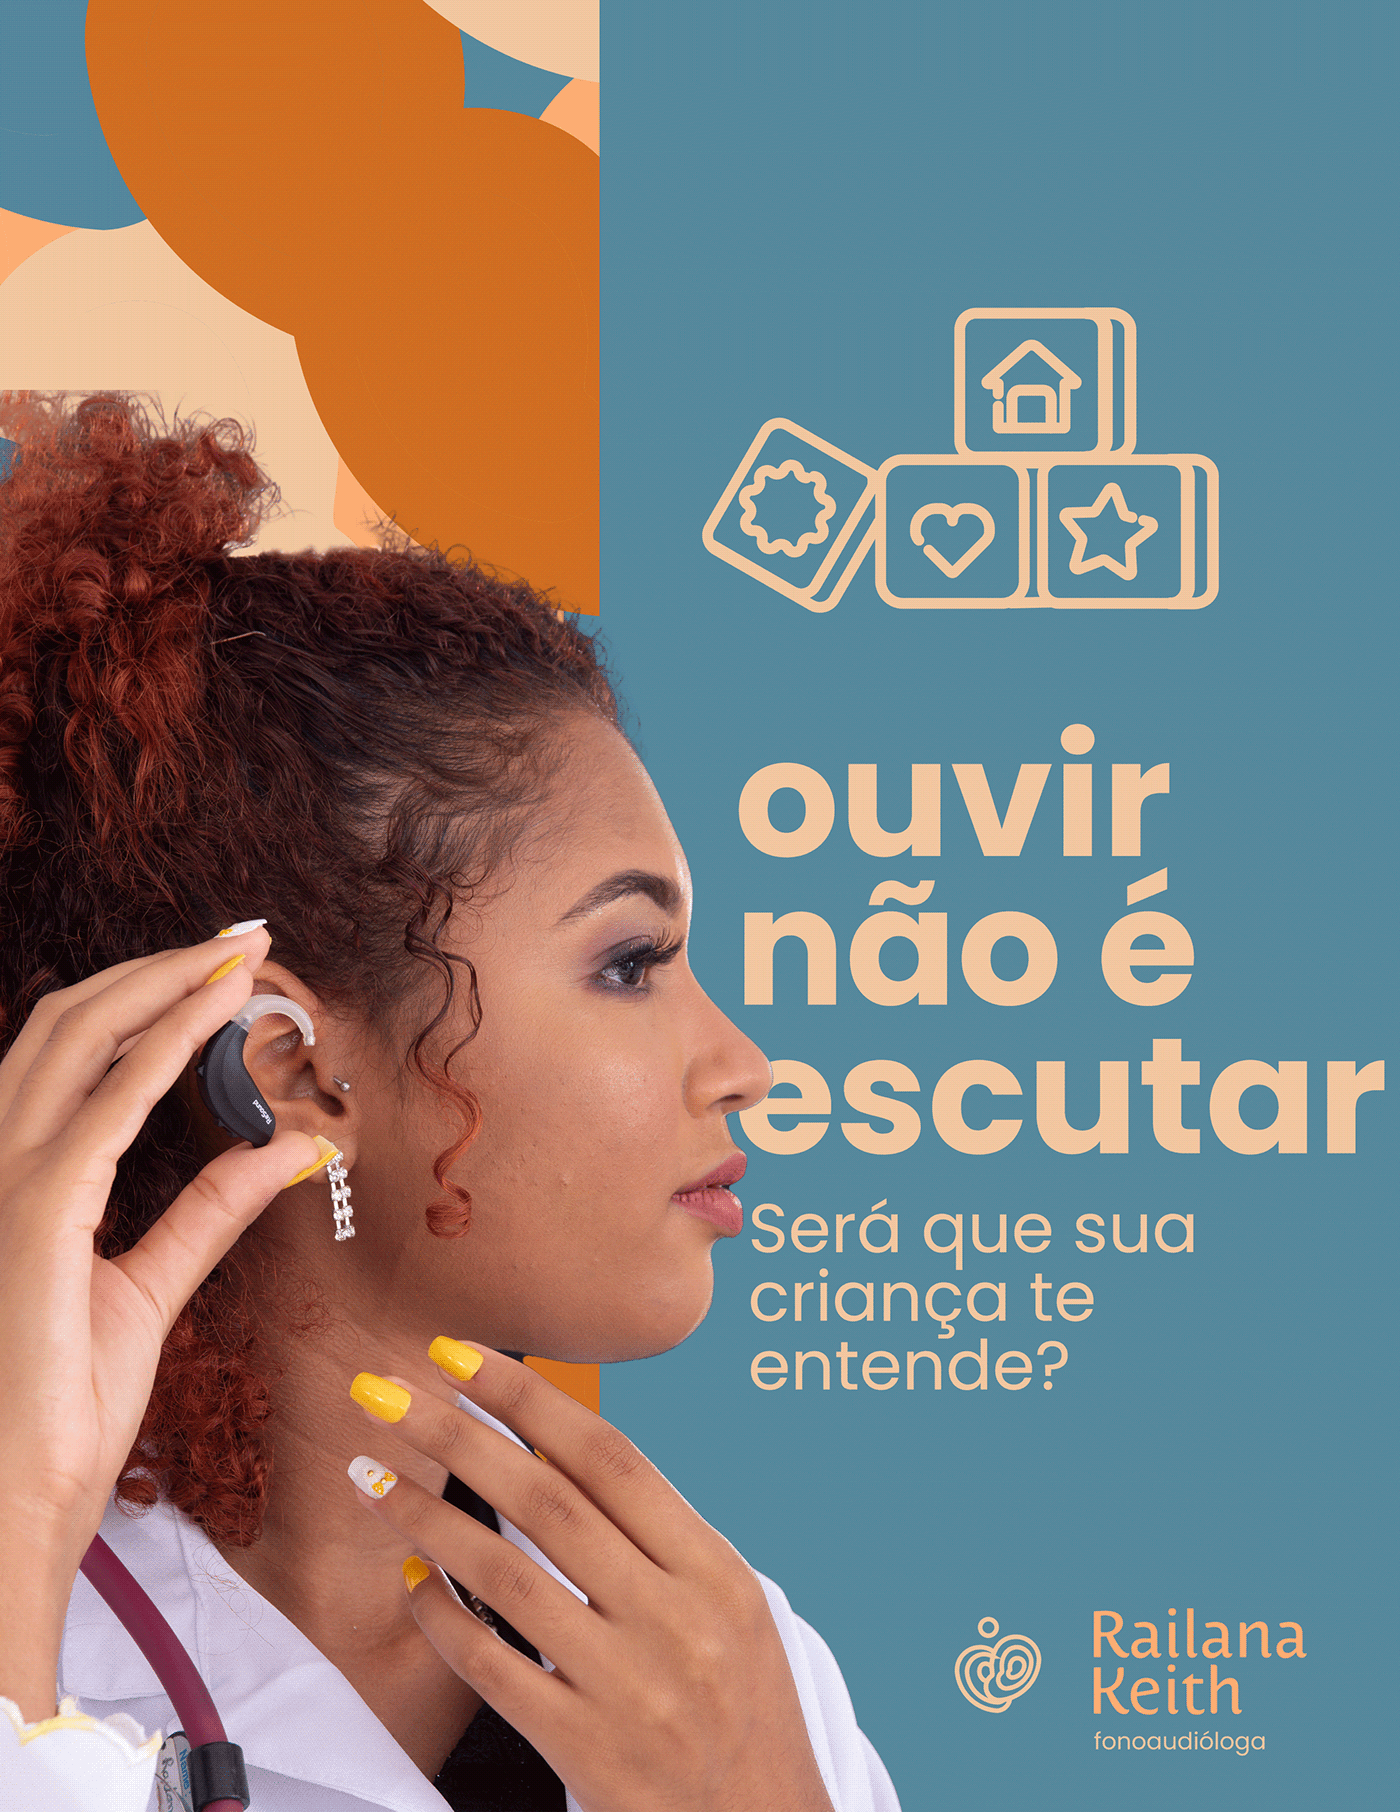 fonoaudiologia speech therapy visual identity identidade visual brand identity Logotipo #Autismo #clinica #fono mulher